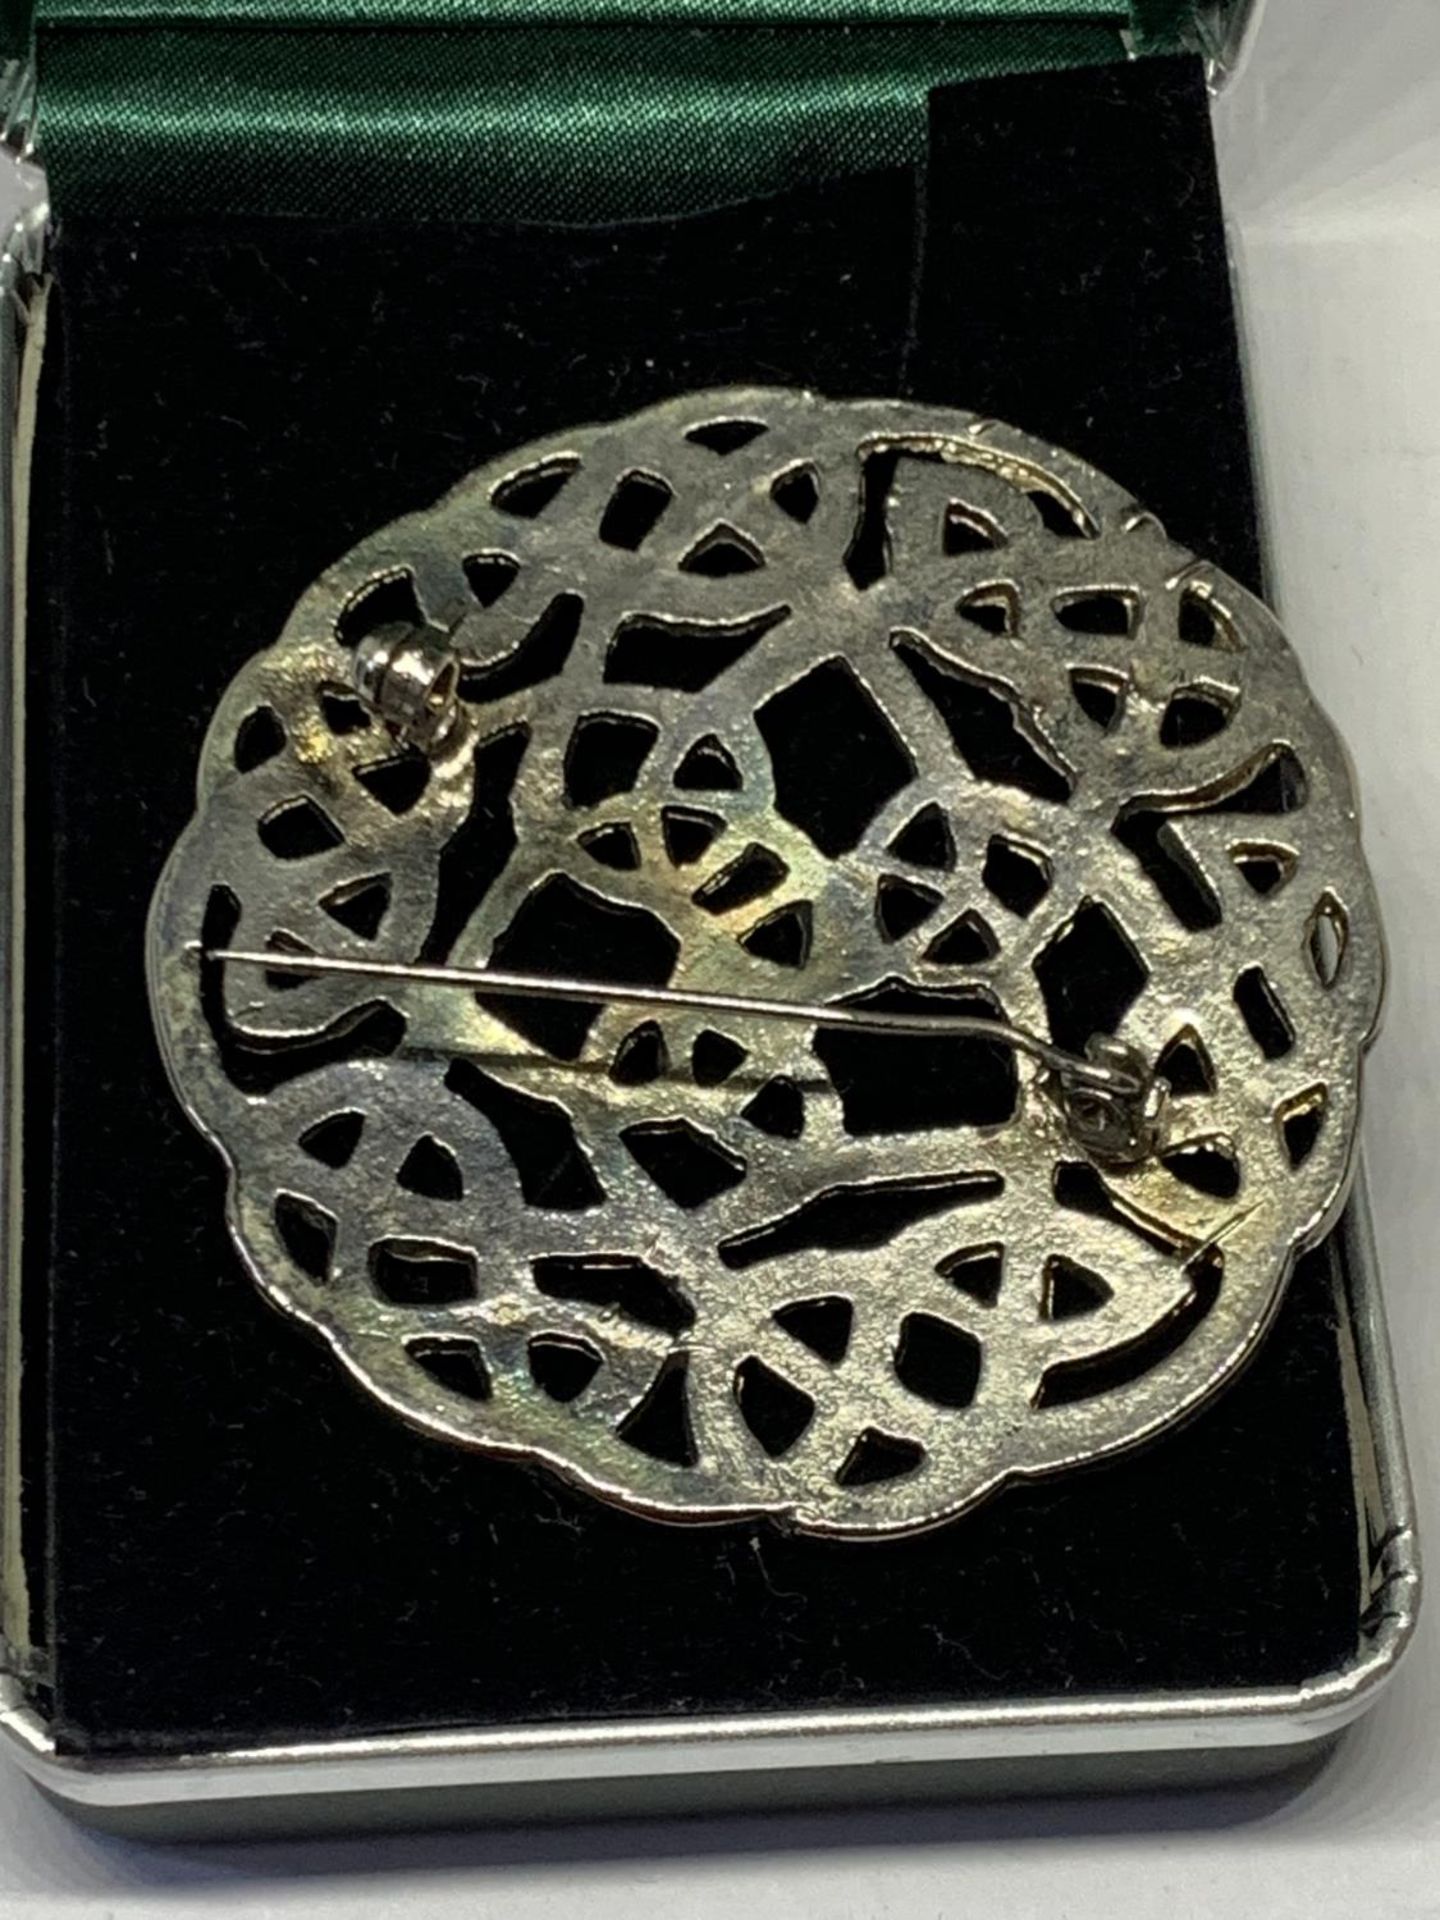 AN IRISH CELTIC BROOCH IN A PRESENTATION BOX - Image 3 of 3